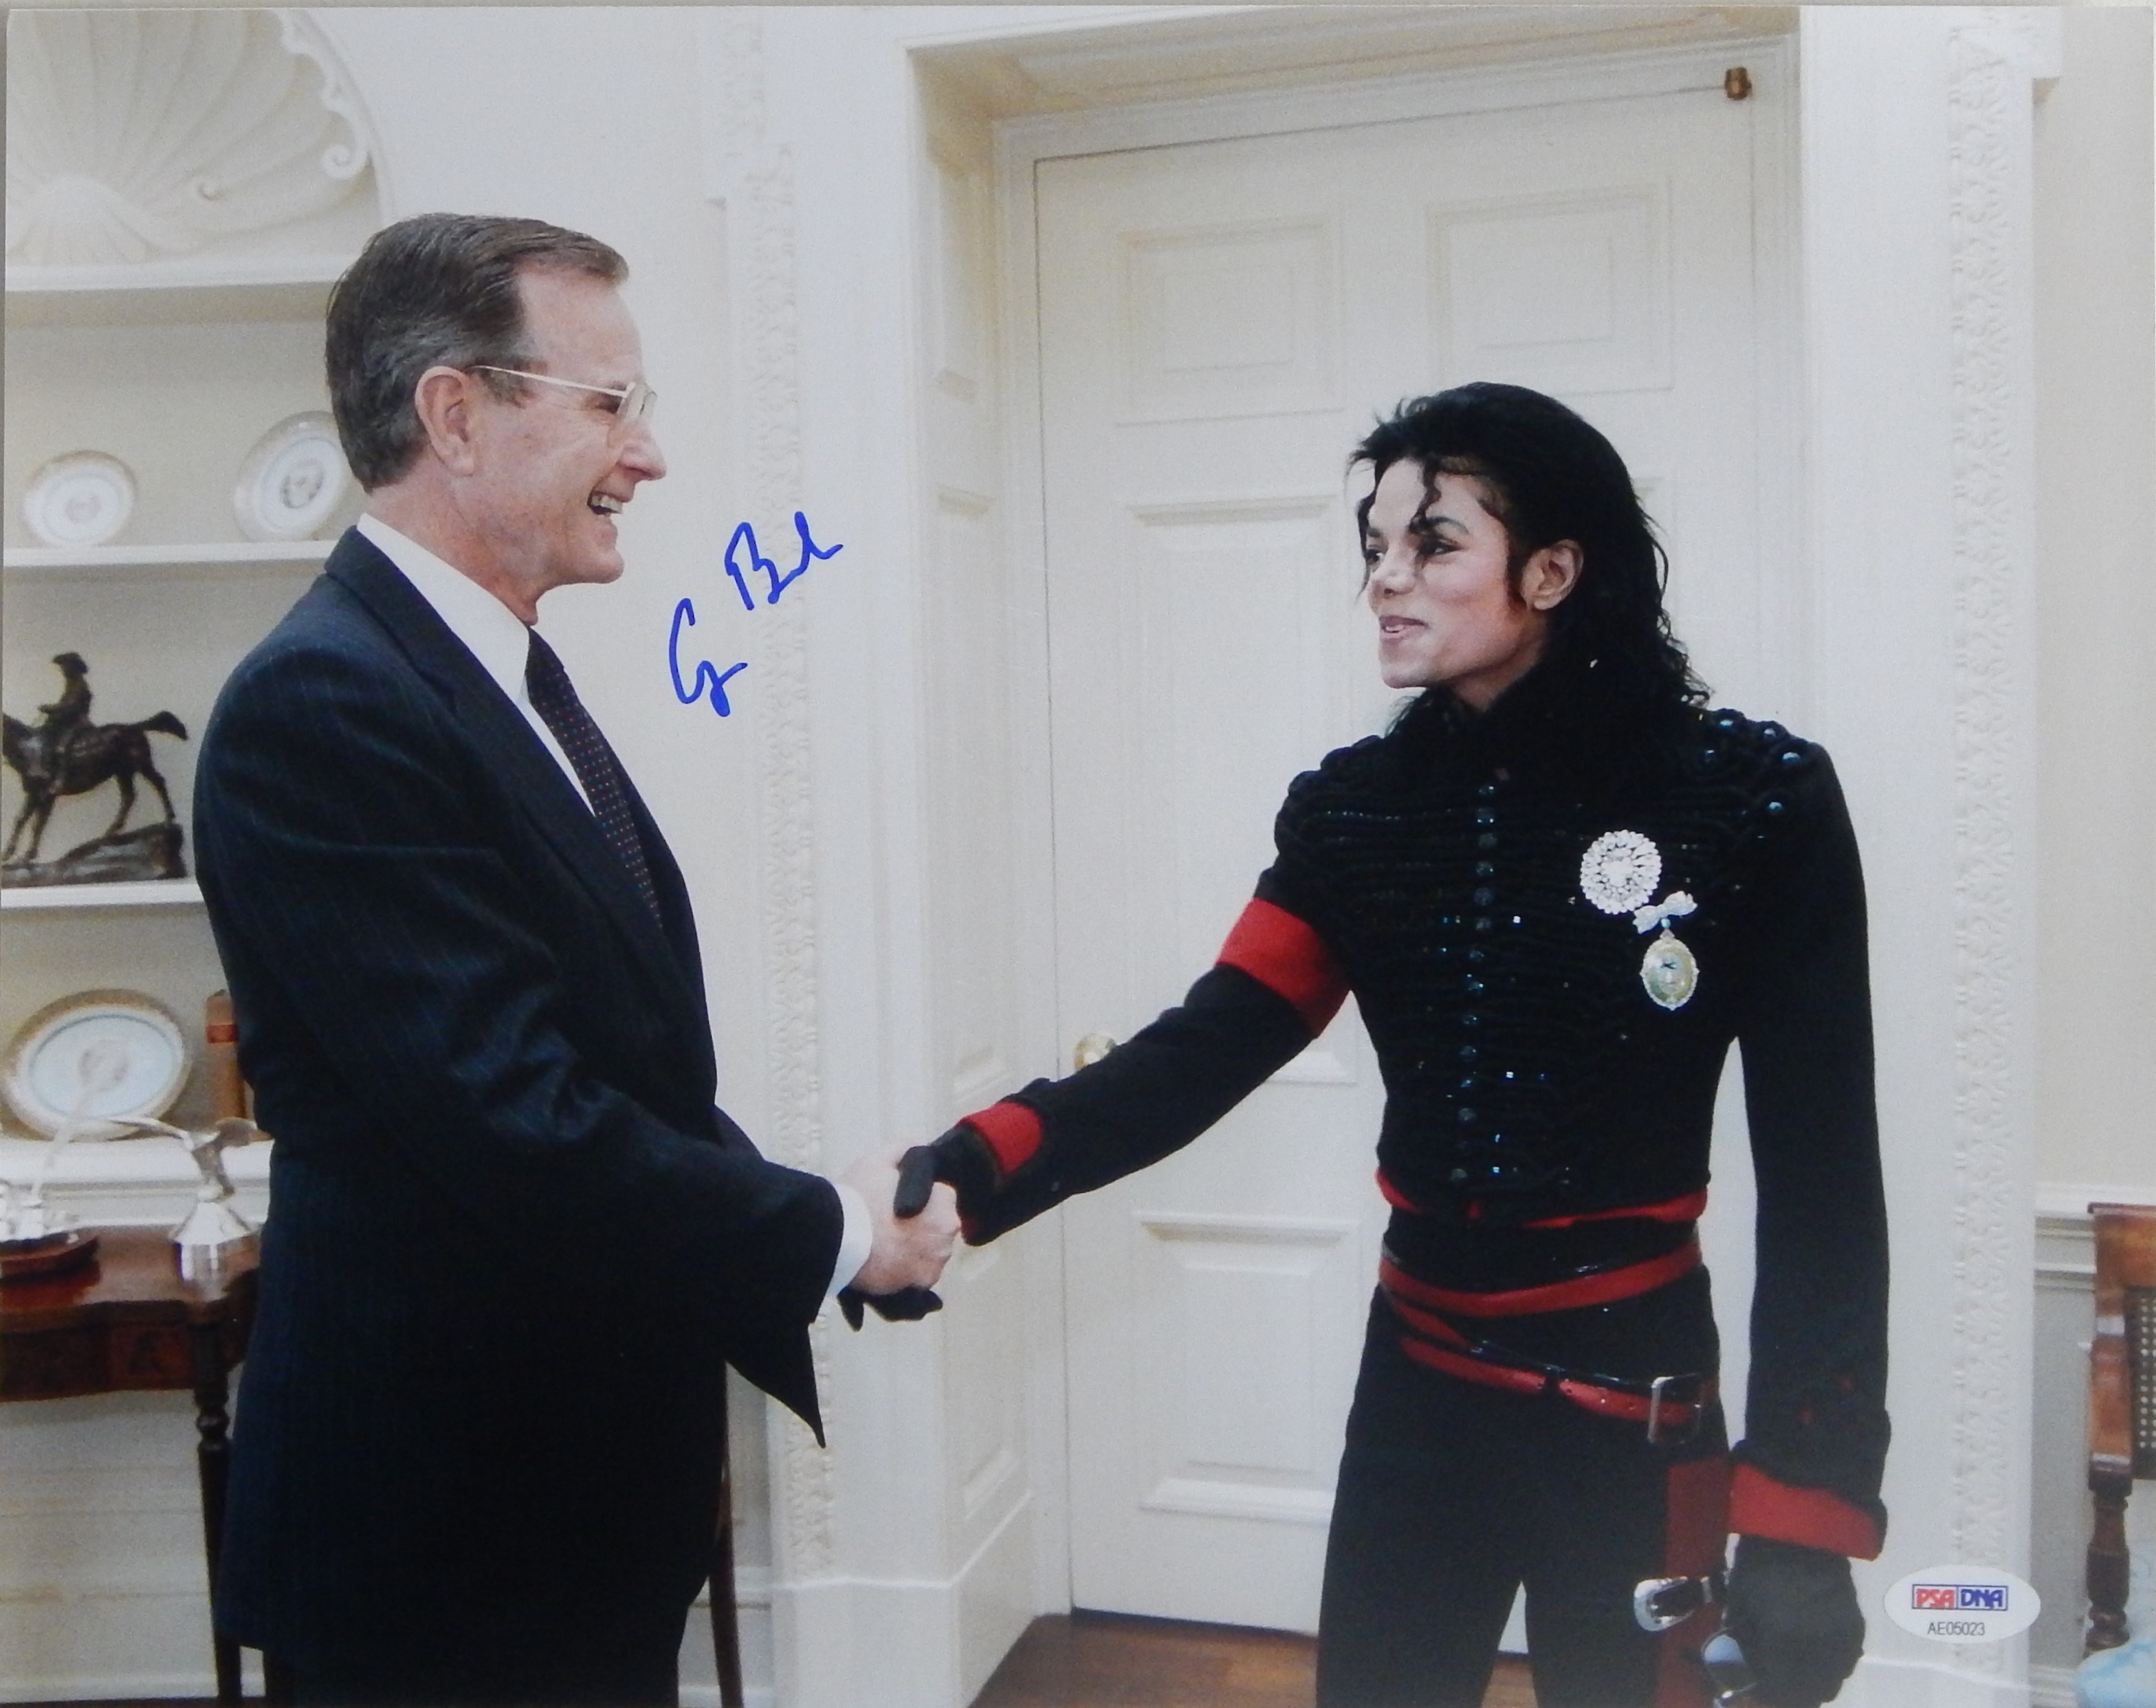 Presidential - President George HW Bush 16x20" Signed Photo Meeting Michael Jackson (PSA/DNA)